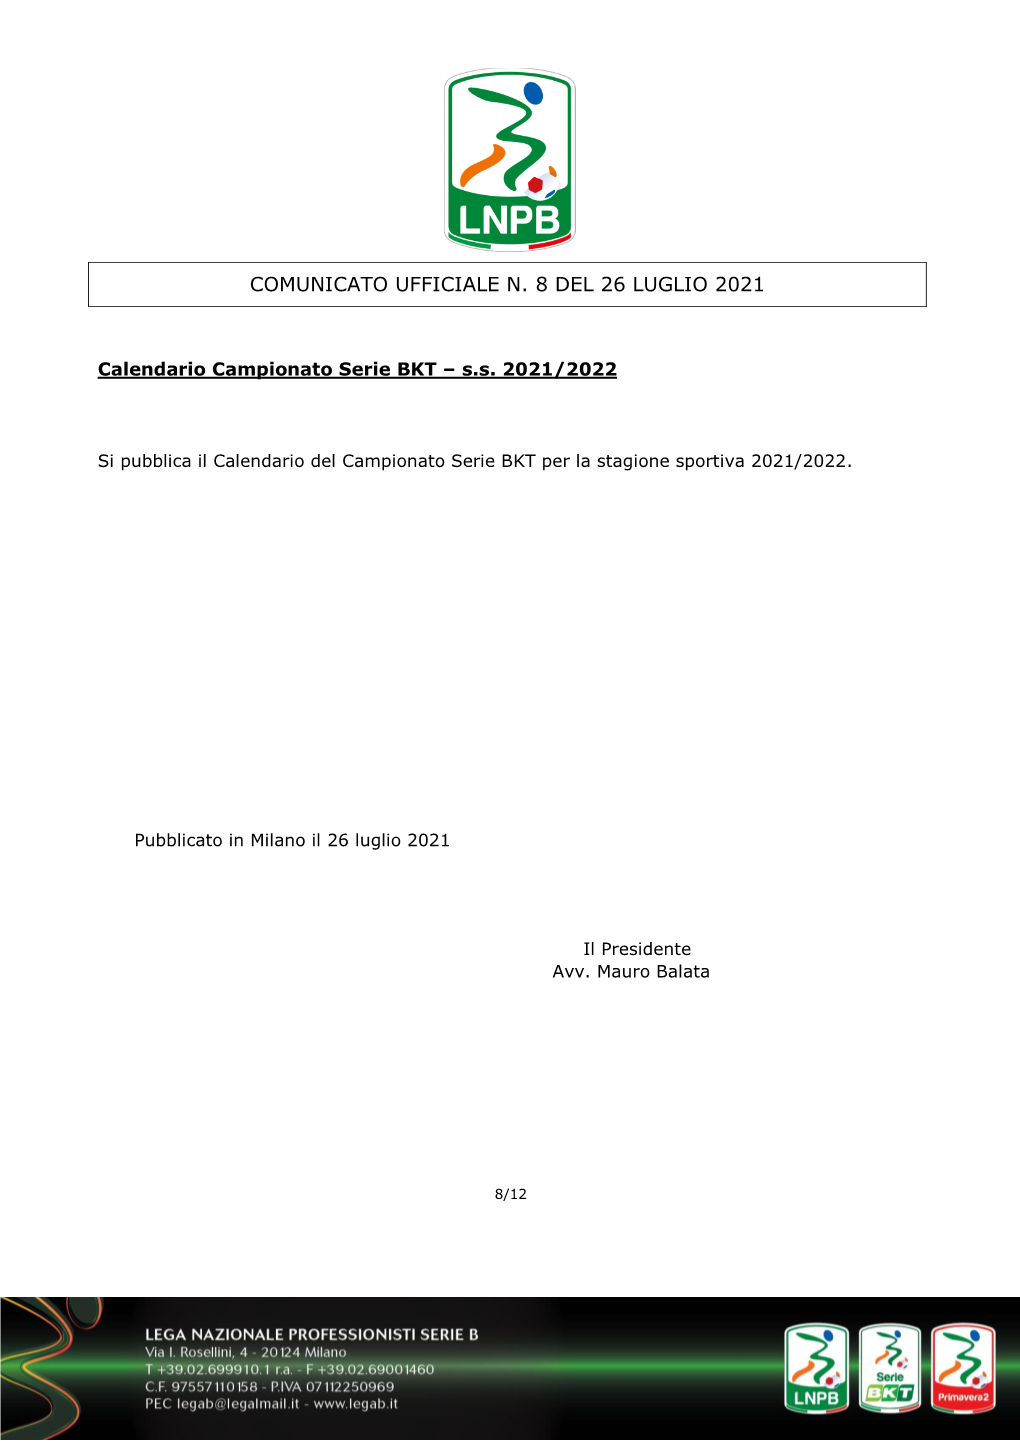 CU LNPB N.8 – Calendario Serie BKT 2021/2022